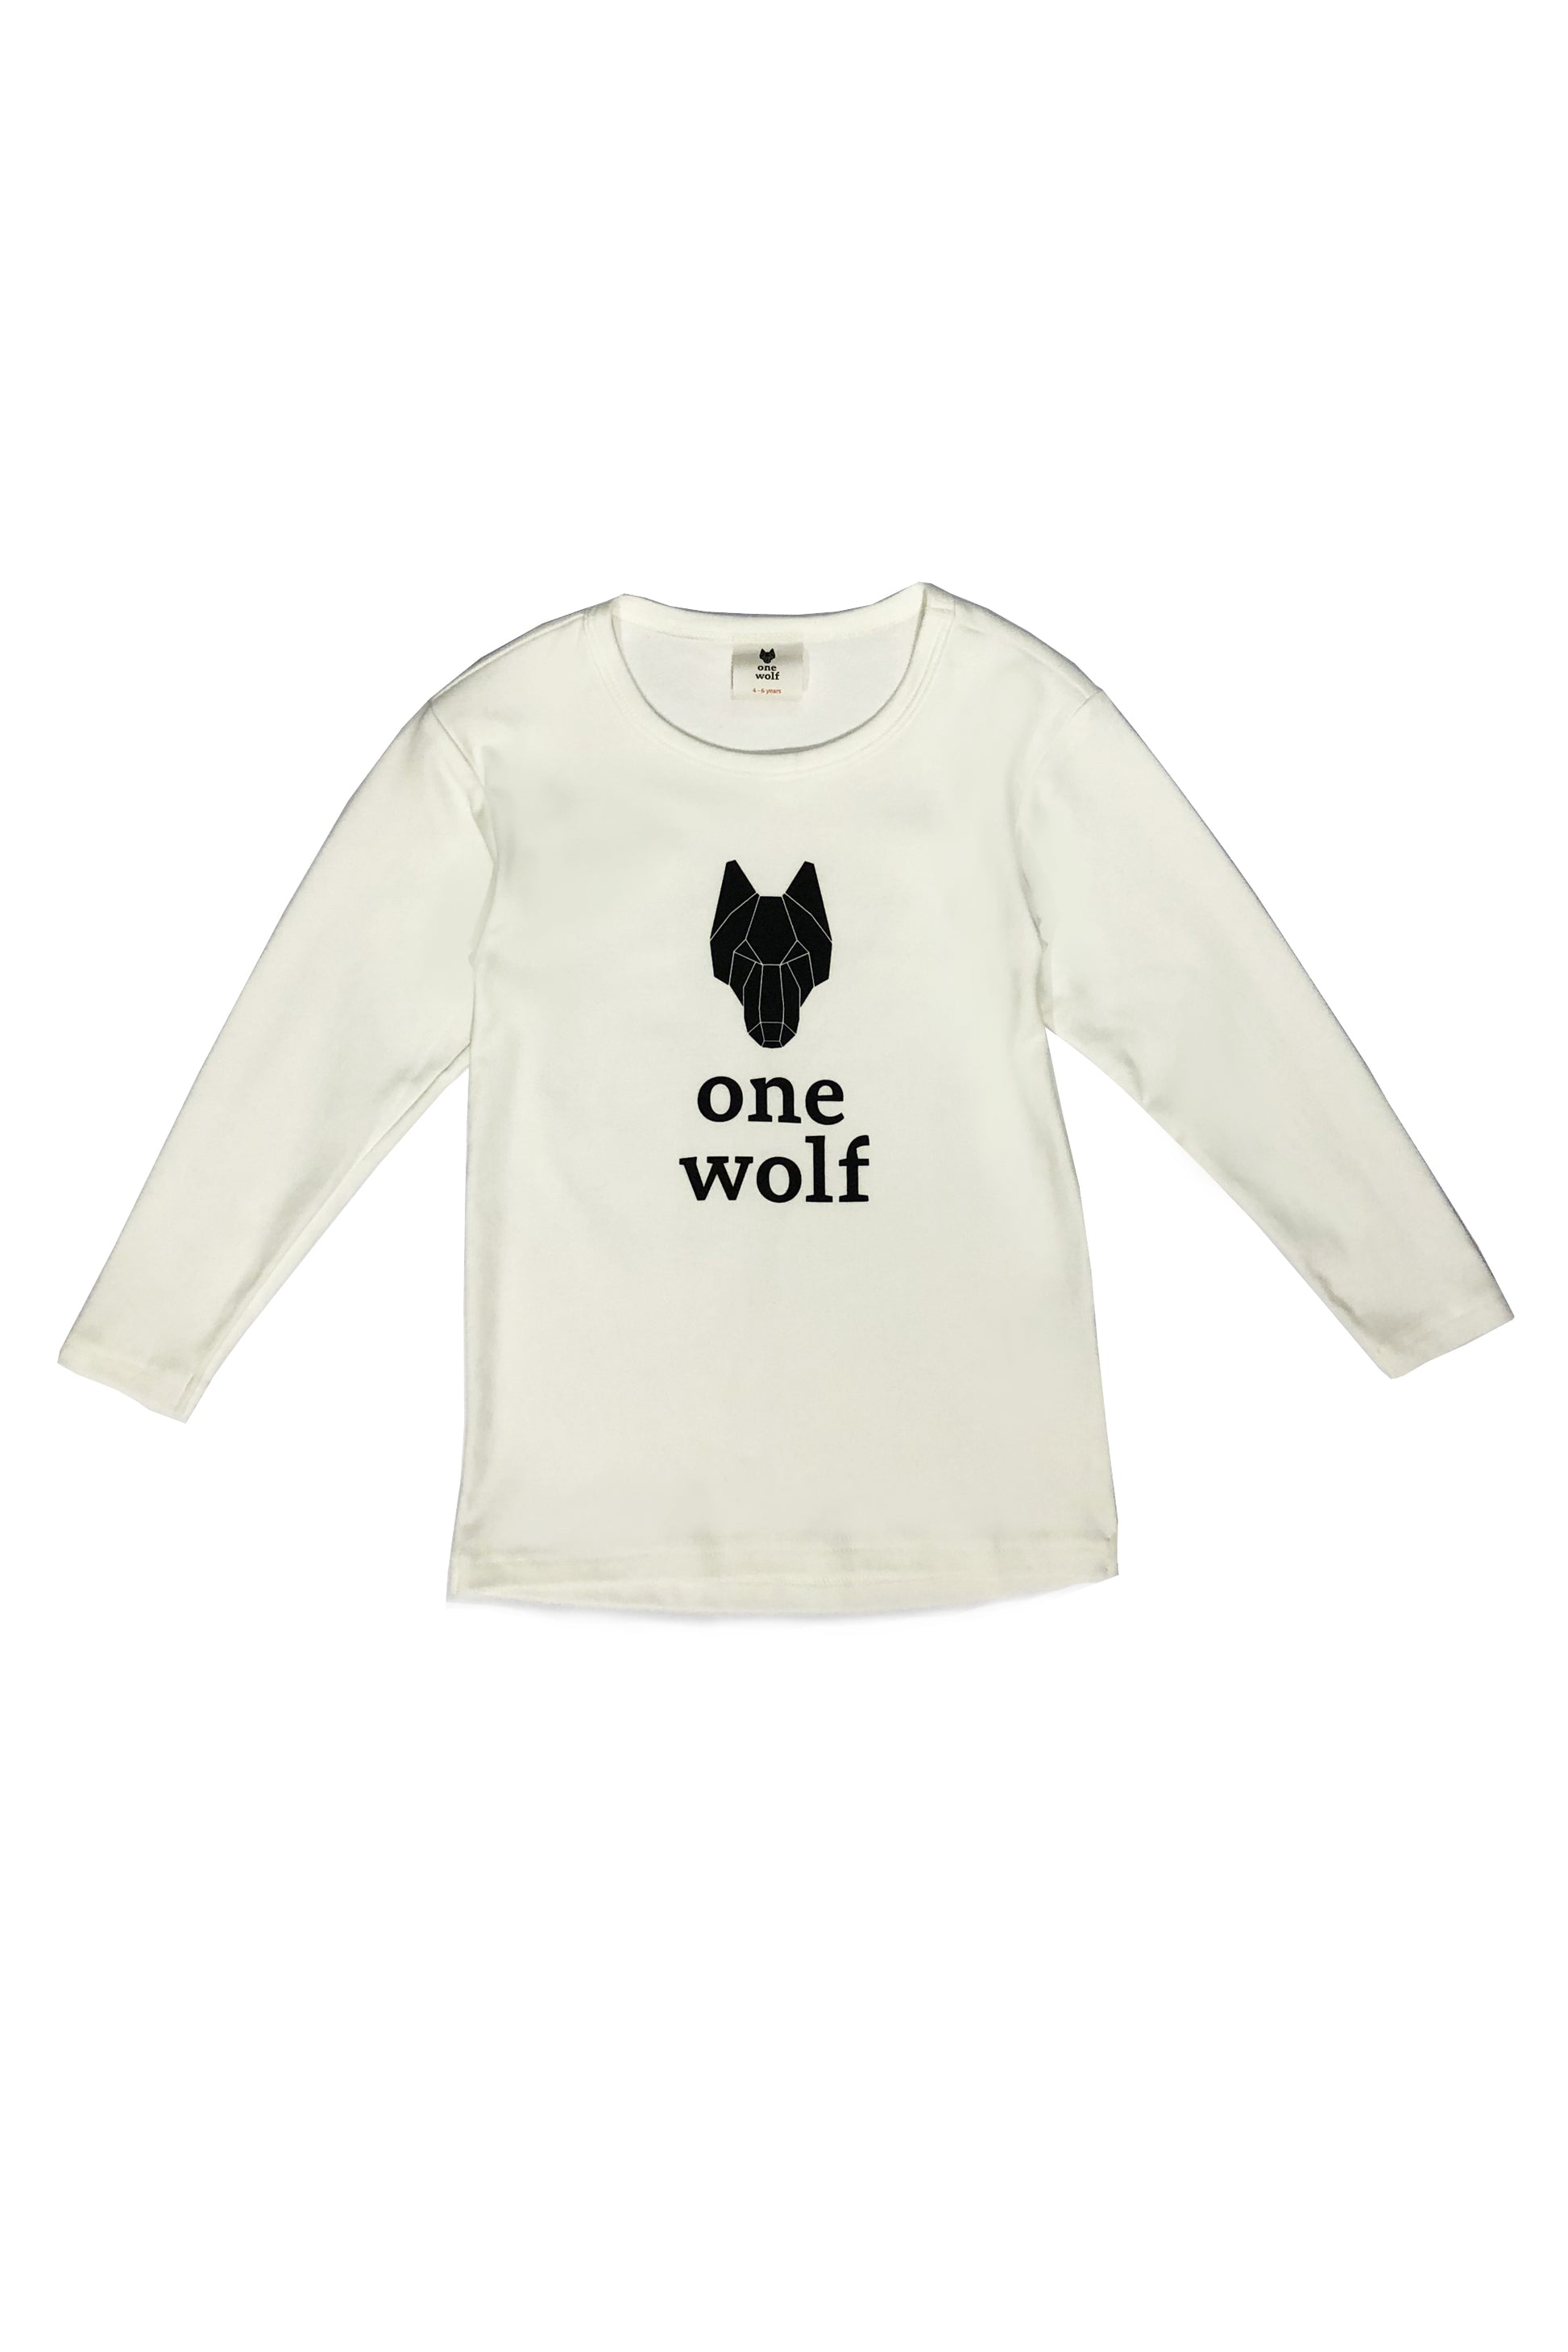 KIDS OW LOGO long sleeve T-shirt off-white/black logo - One Wolf